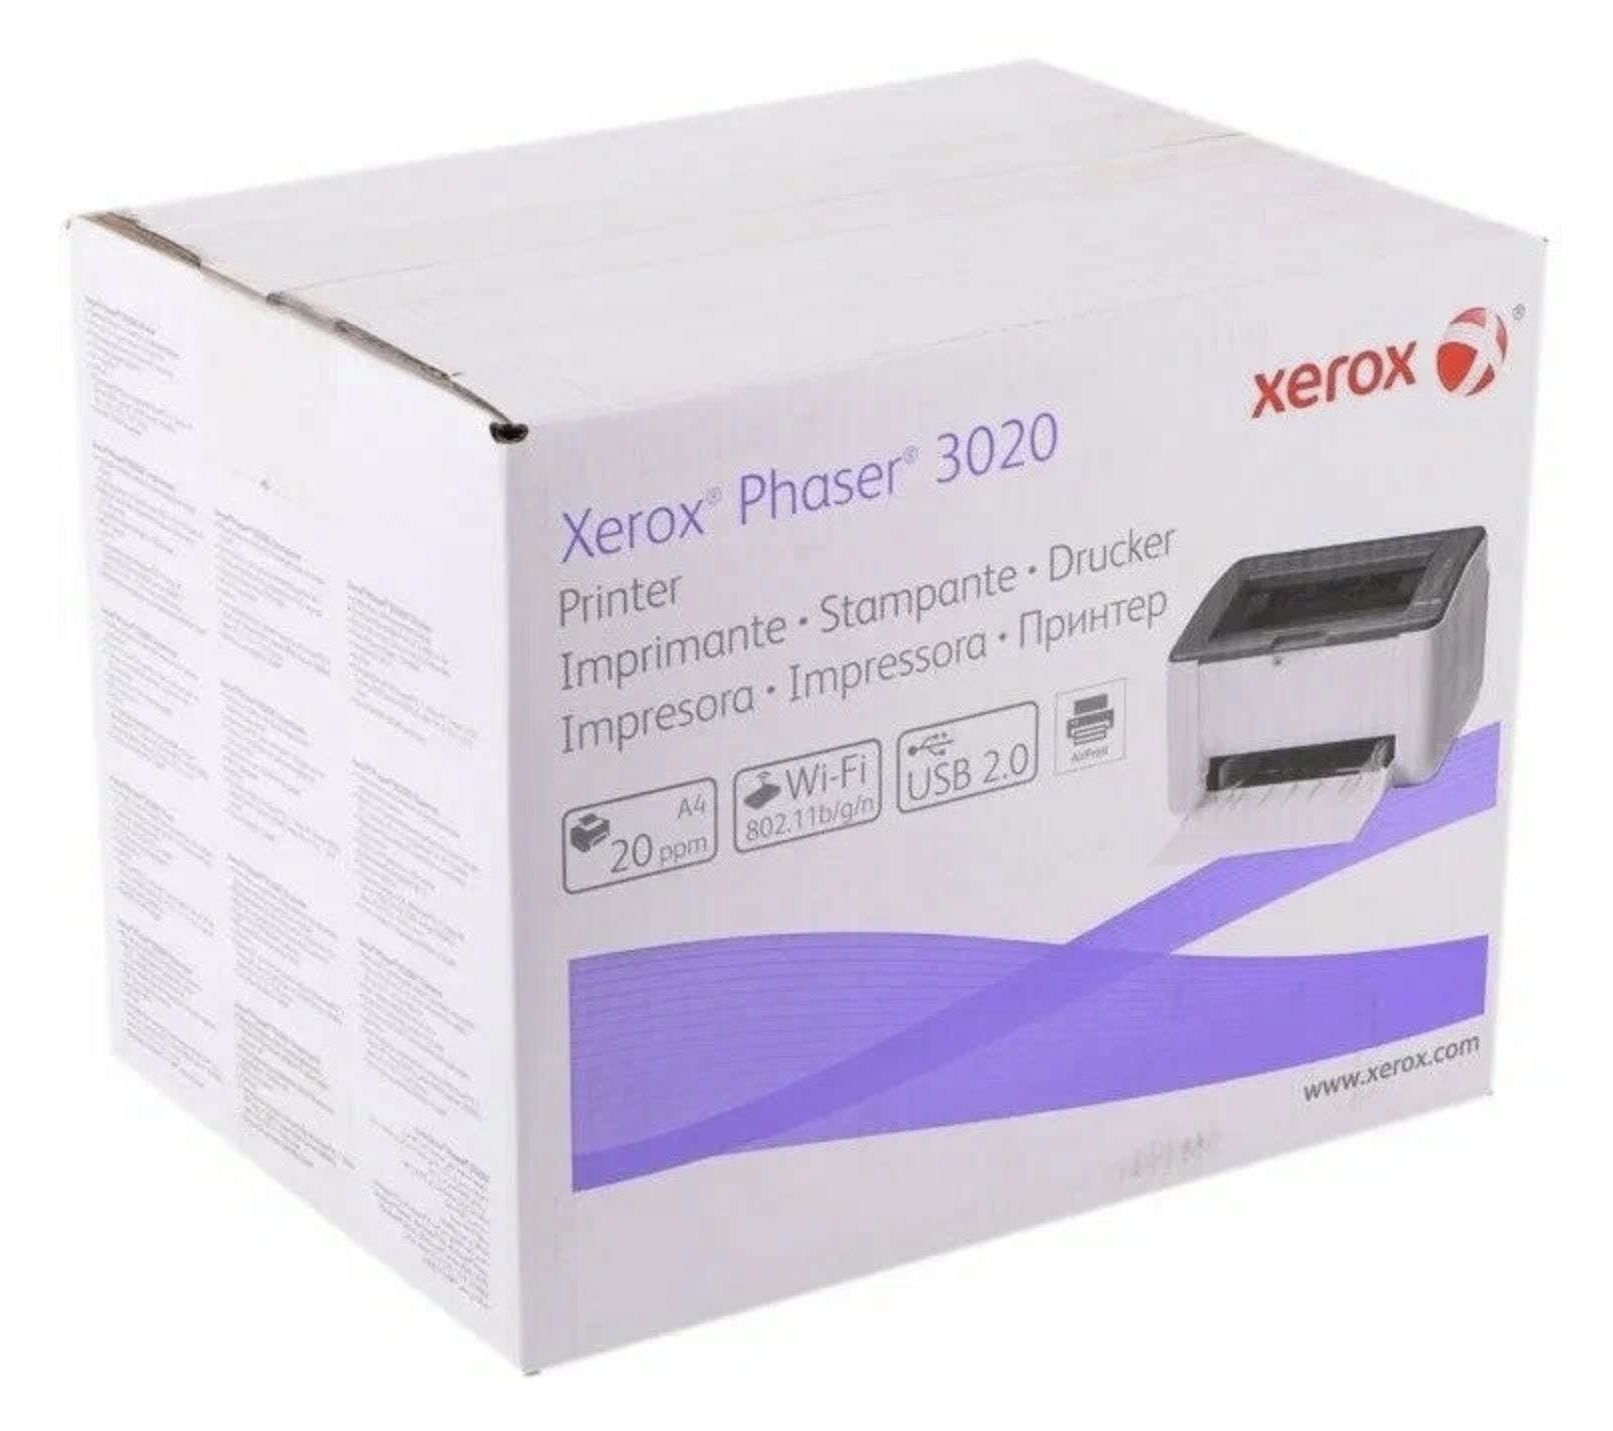 Купить принтер xerox phaser 3020. Xerox Phaser 3020. Принтер Xerox Phaser 3020. Принтер Xerox Phaser 3020bi. Xerox Phaser 3020bi, ч/б, a4.